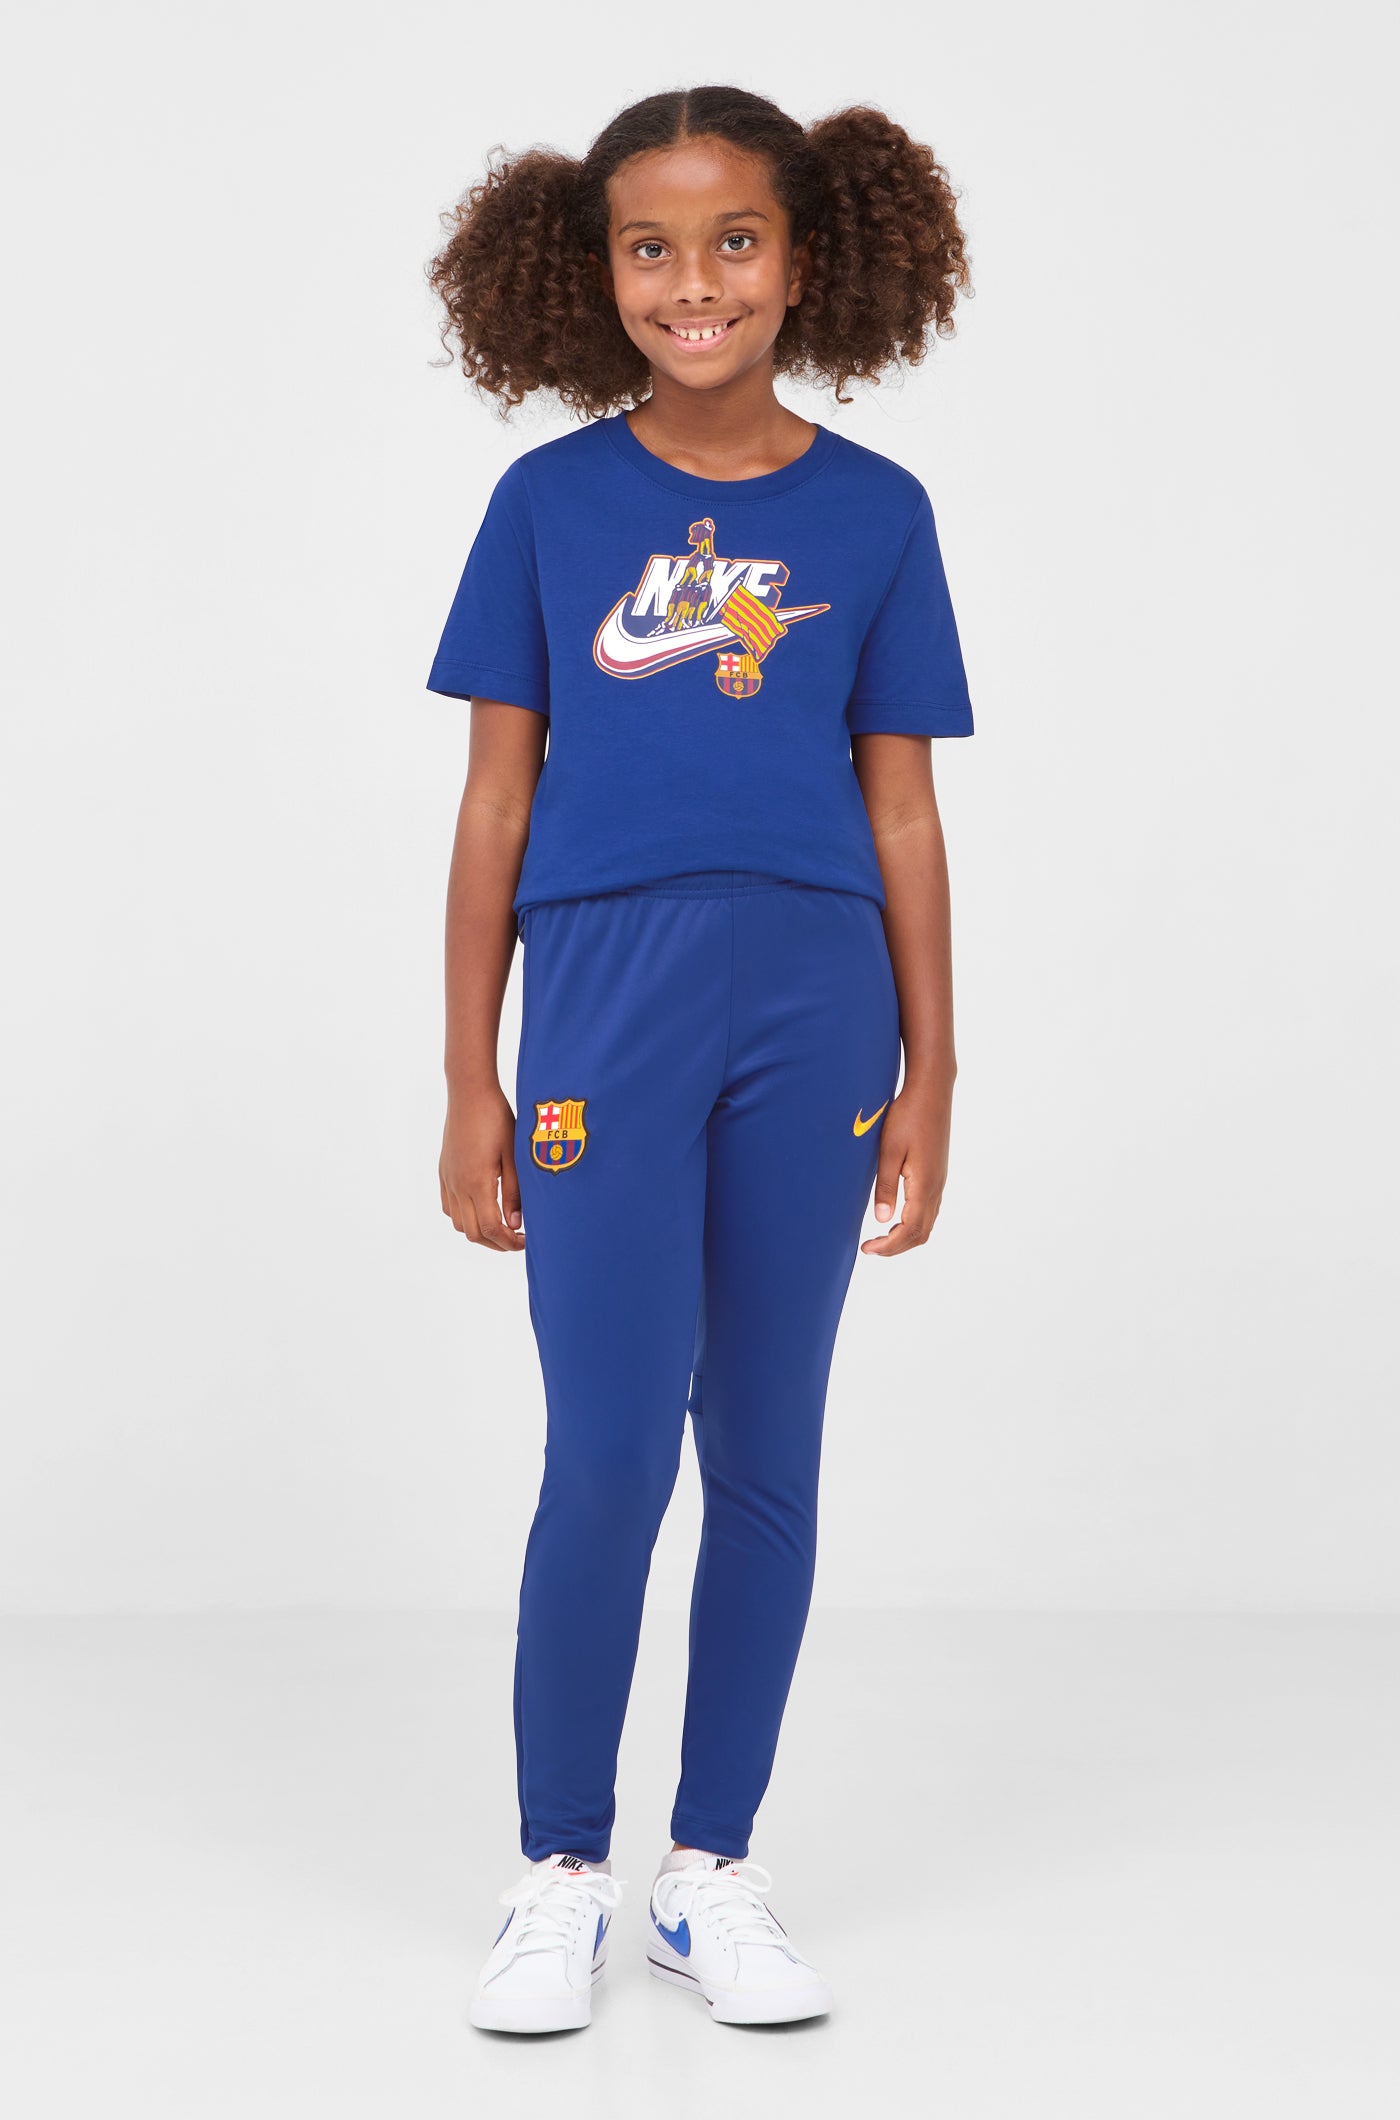 T-Shirt Castellers blaues Barça Nike – Junior